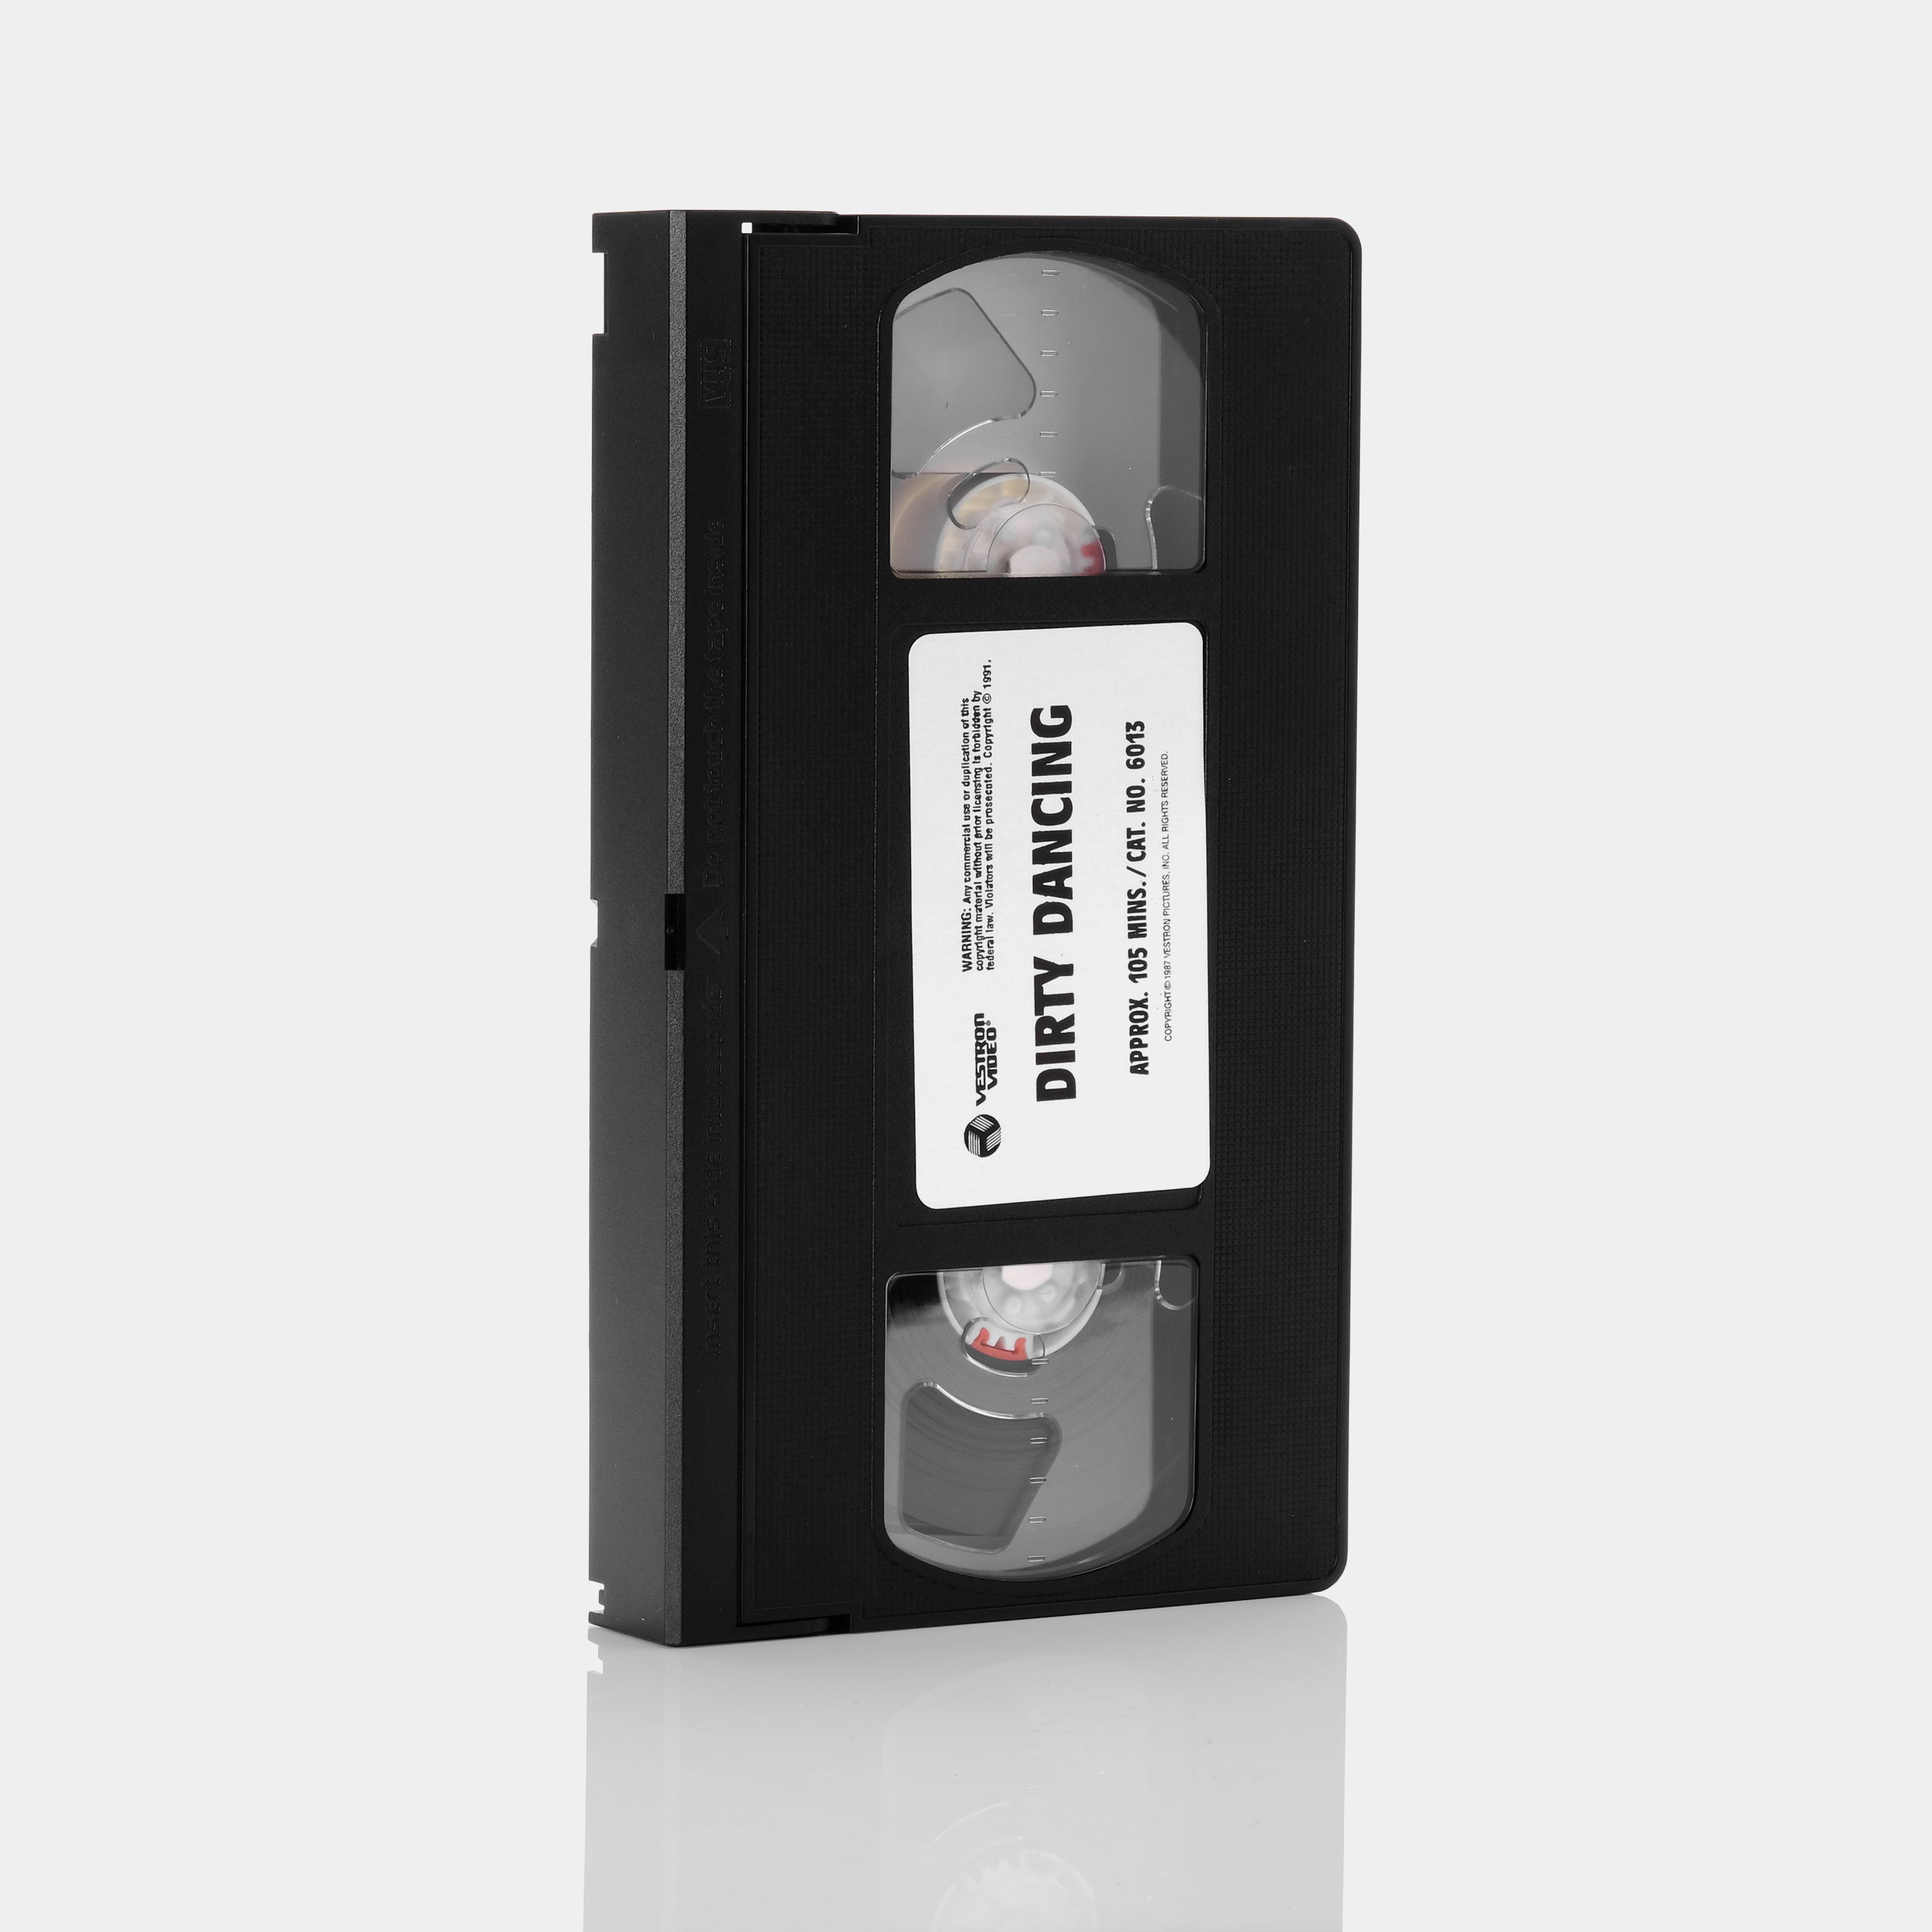 Dirty Dancing VHS Tape